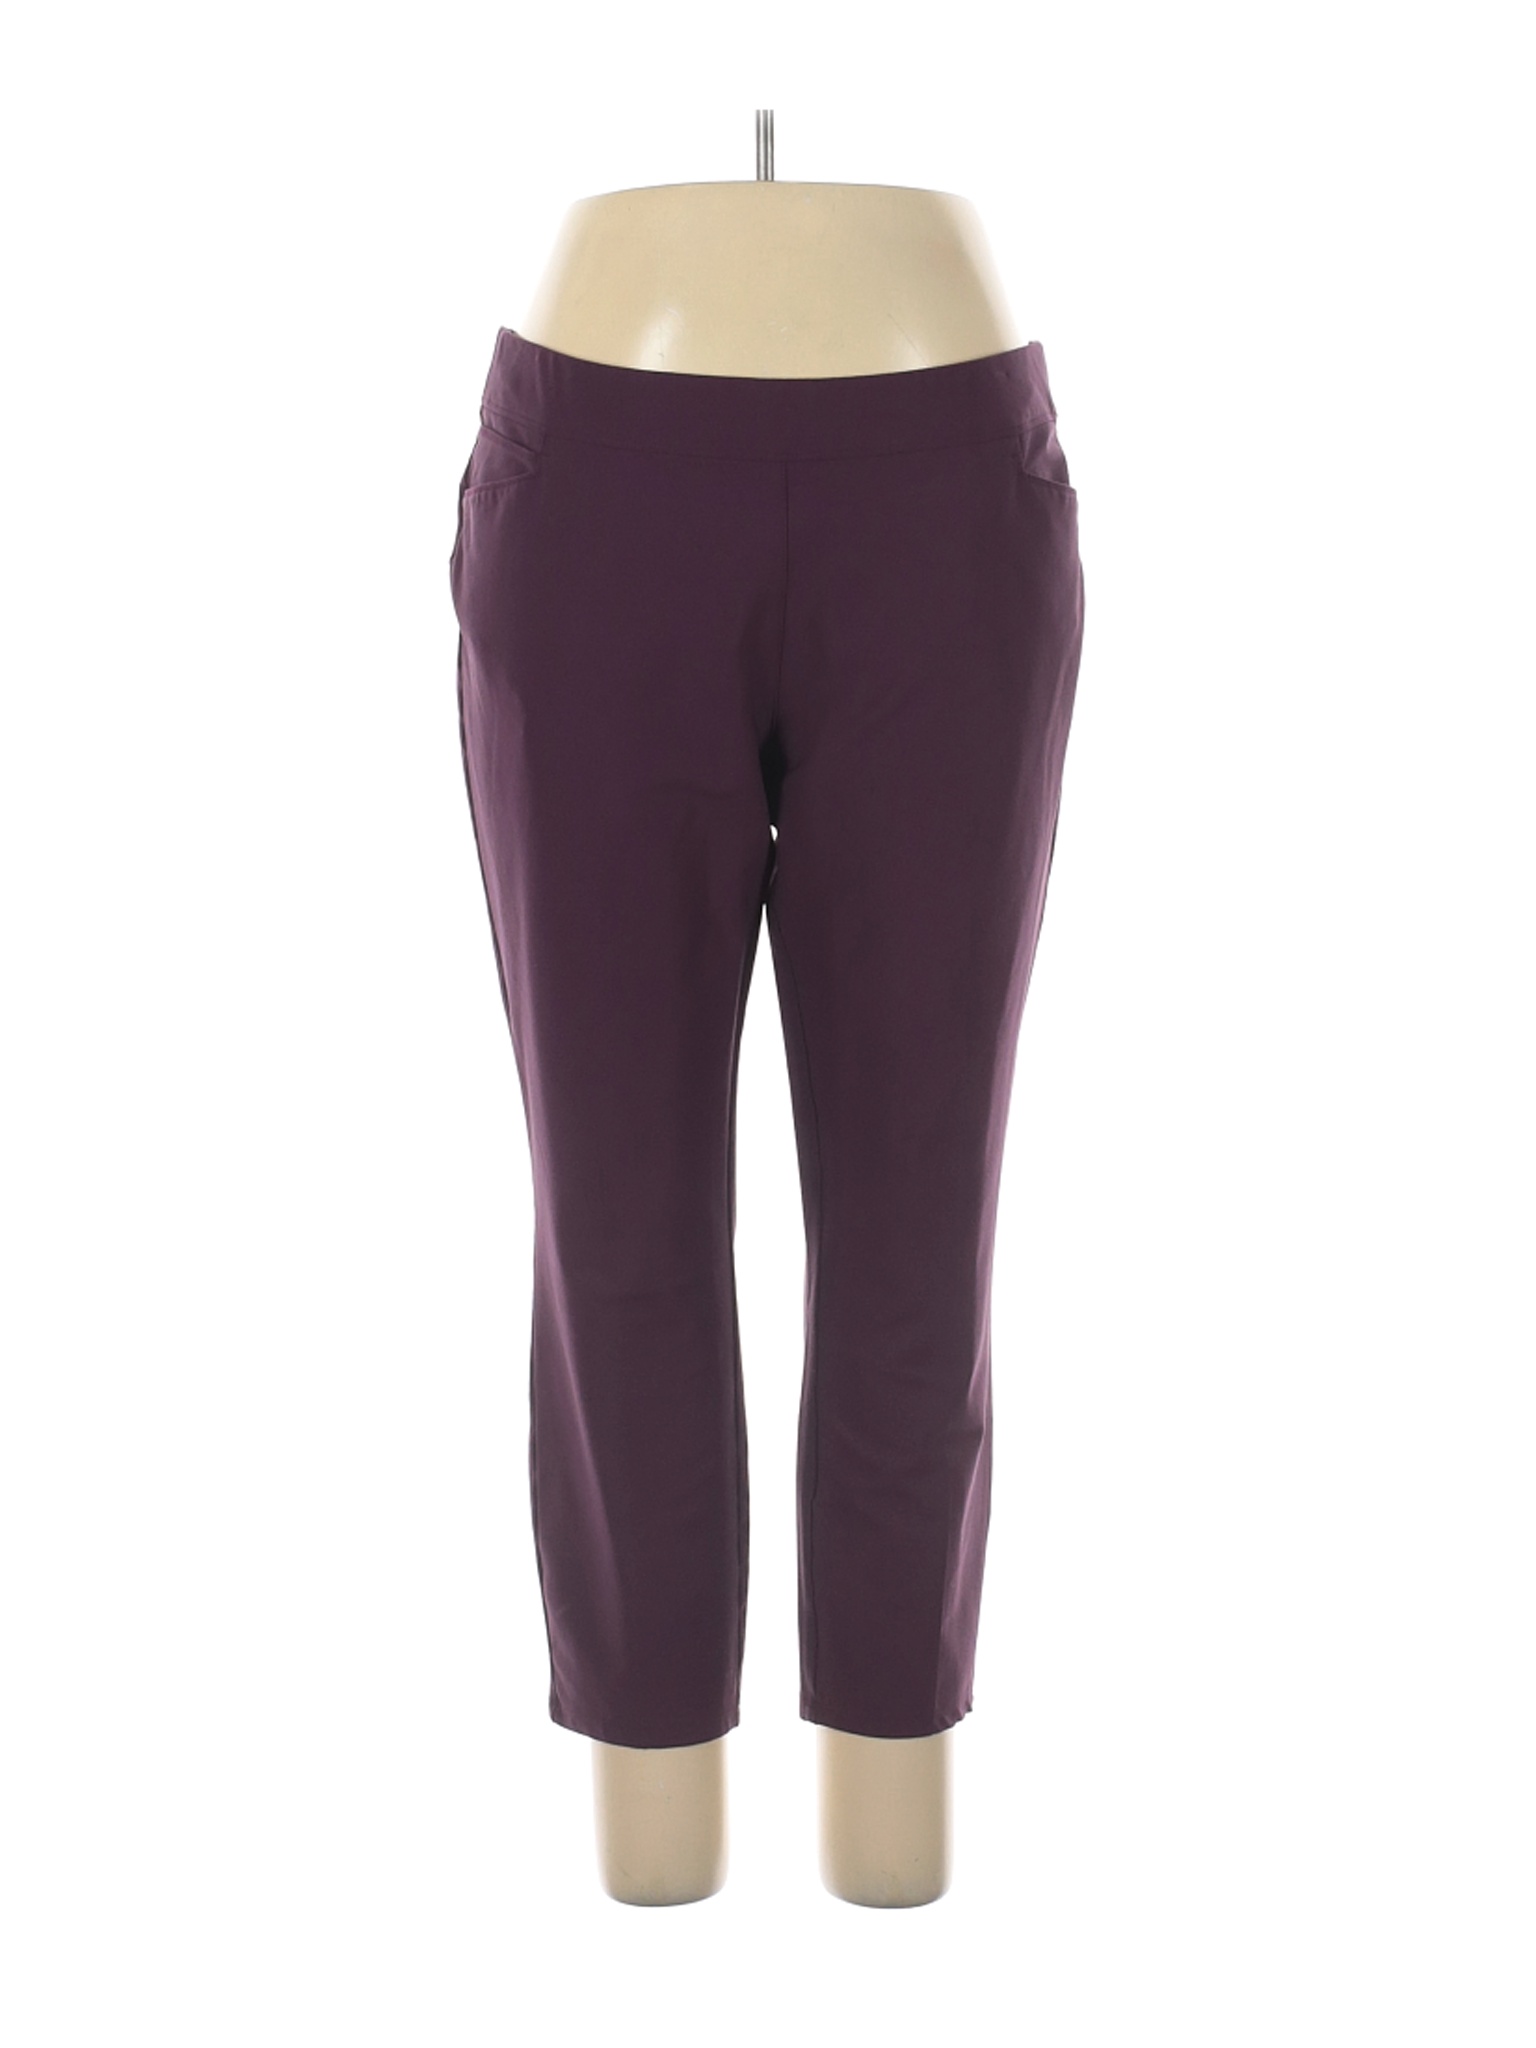 Adidas Women Purple Active Pants XL | eBay